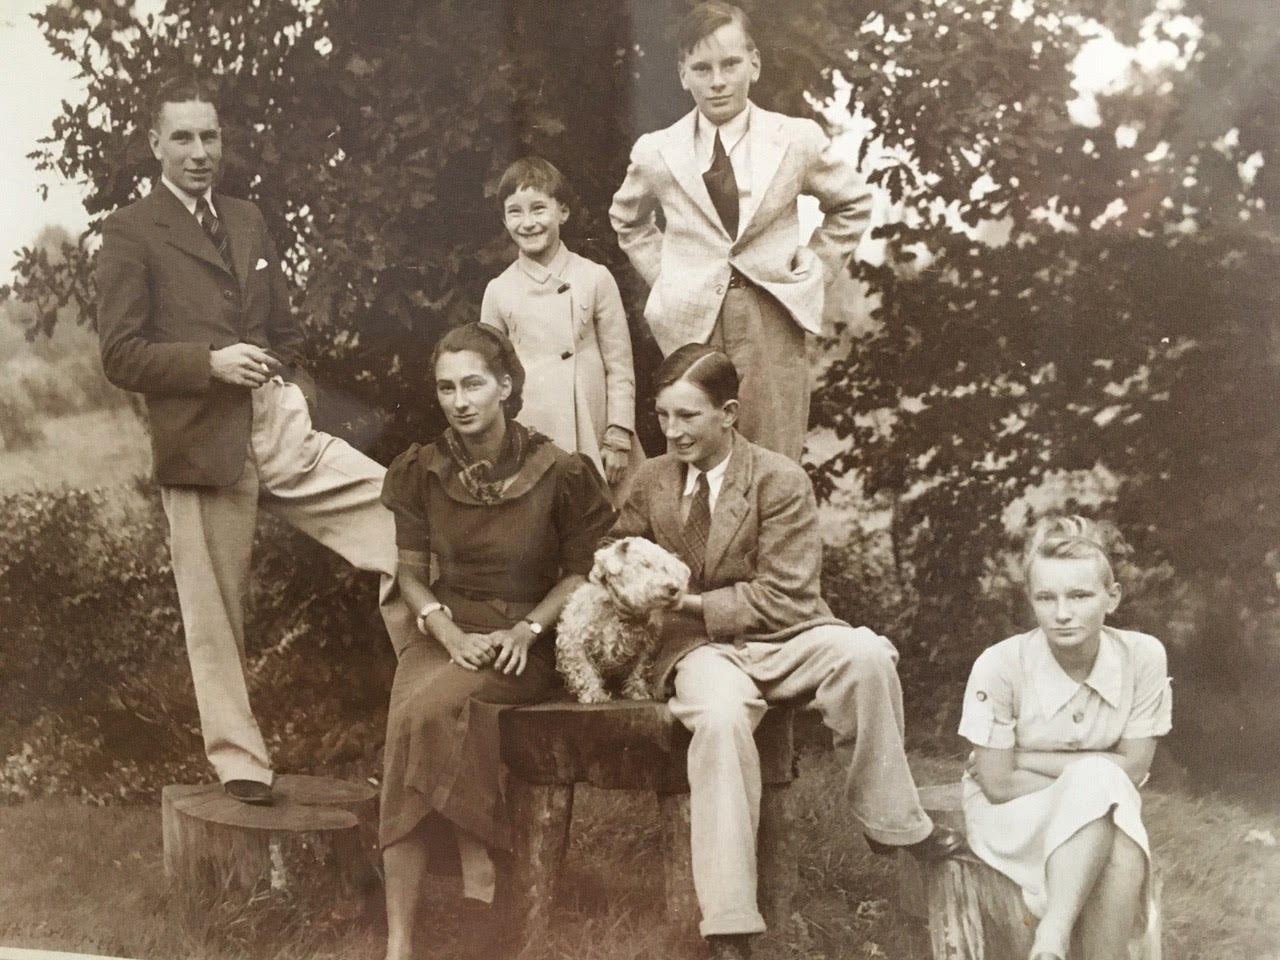 Neil, Mona, Angela, Alistair, Hector and Sheila. Circa 1936